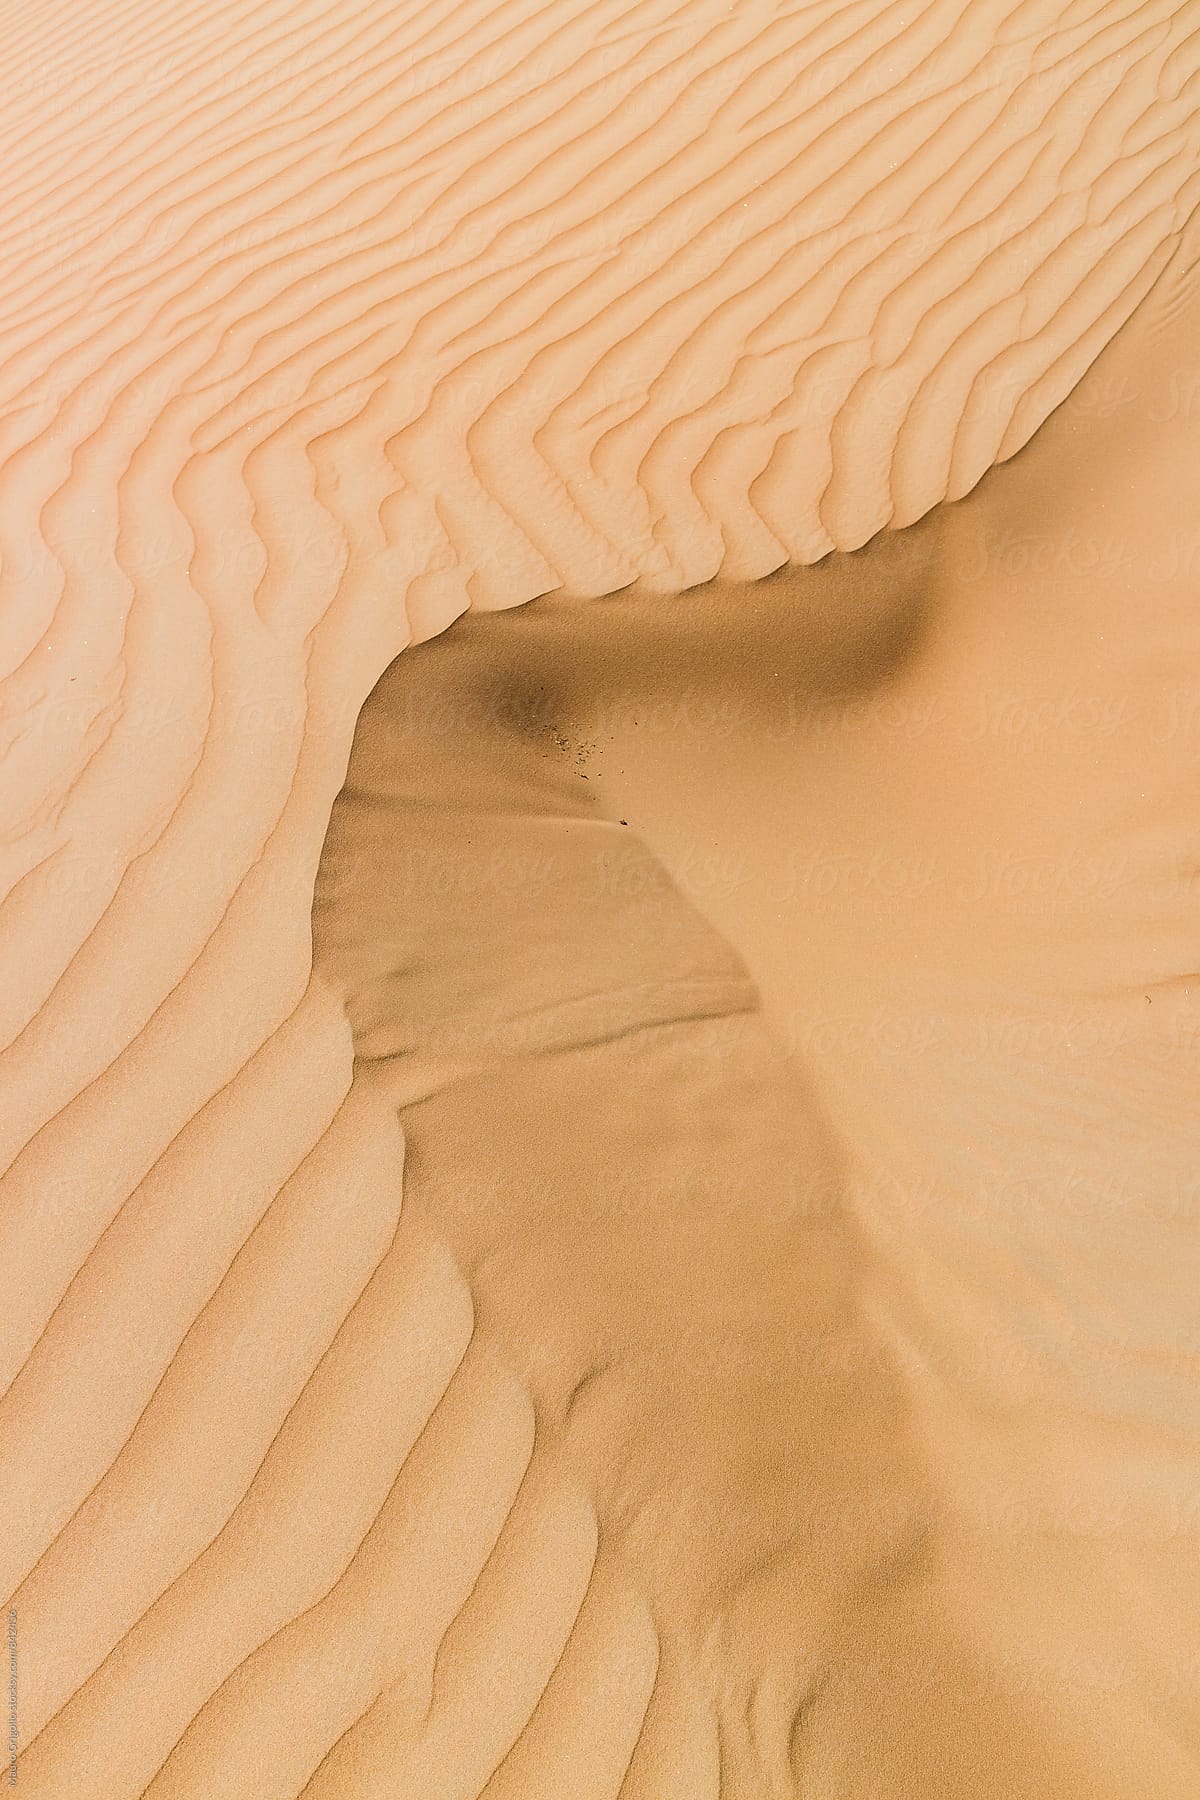 Desert dune. copy space